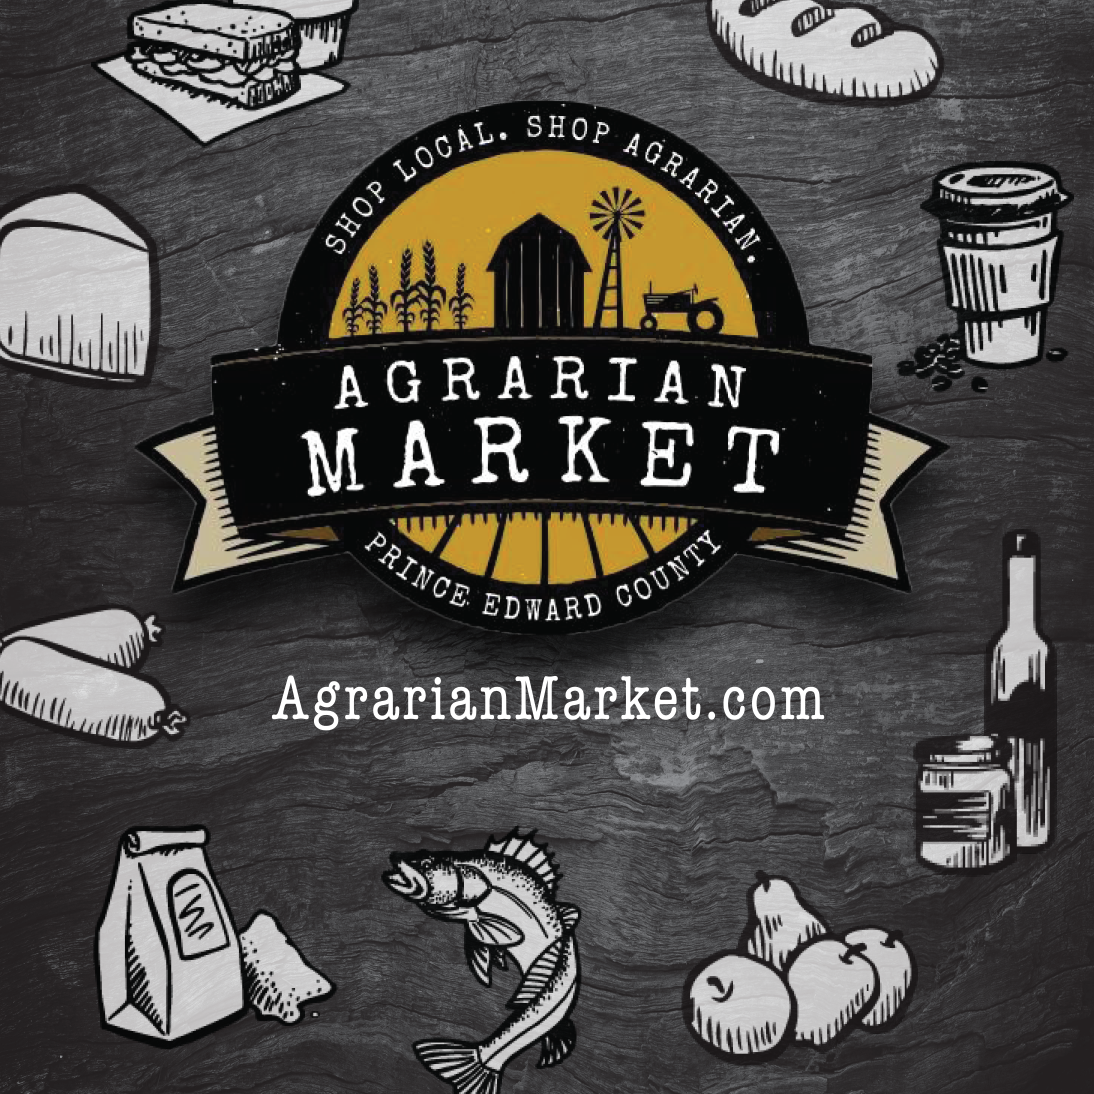 Agrarian Market